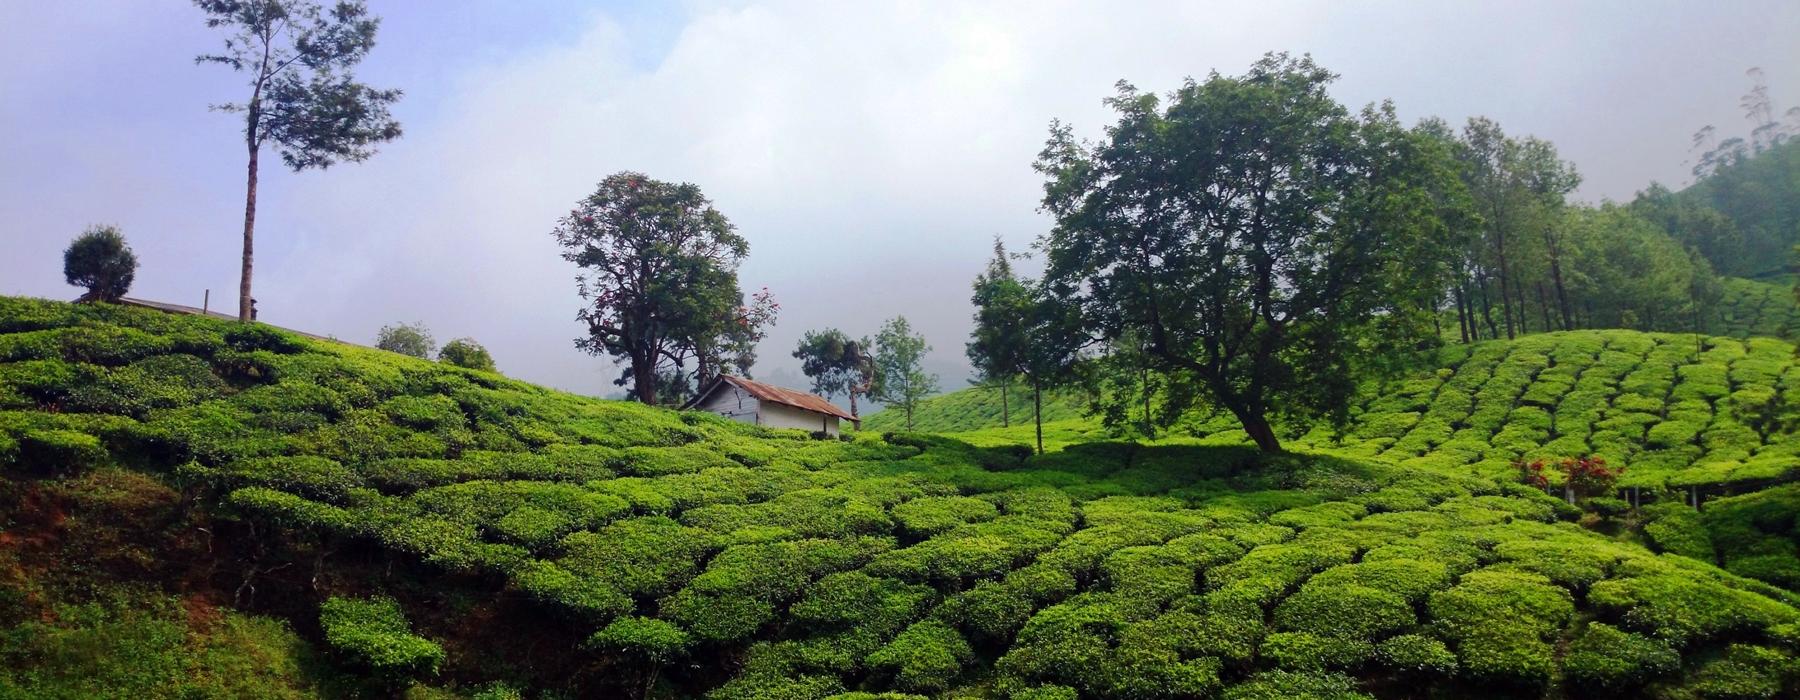 Tea Gardens - Munnar 